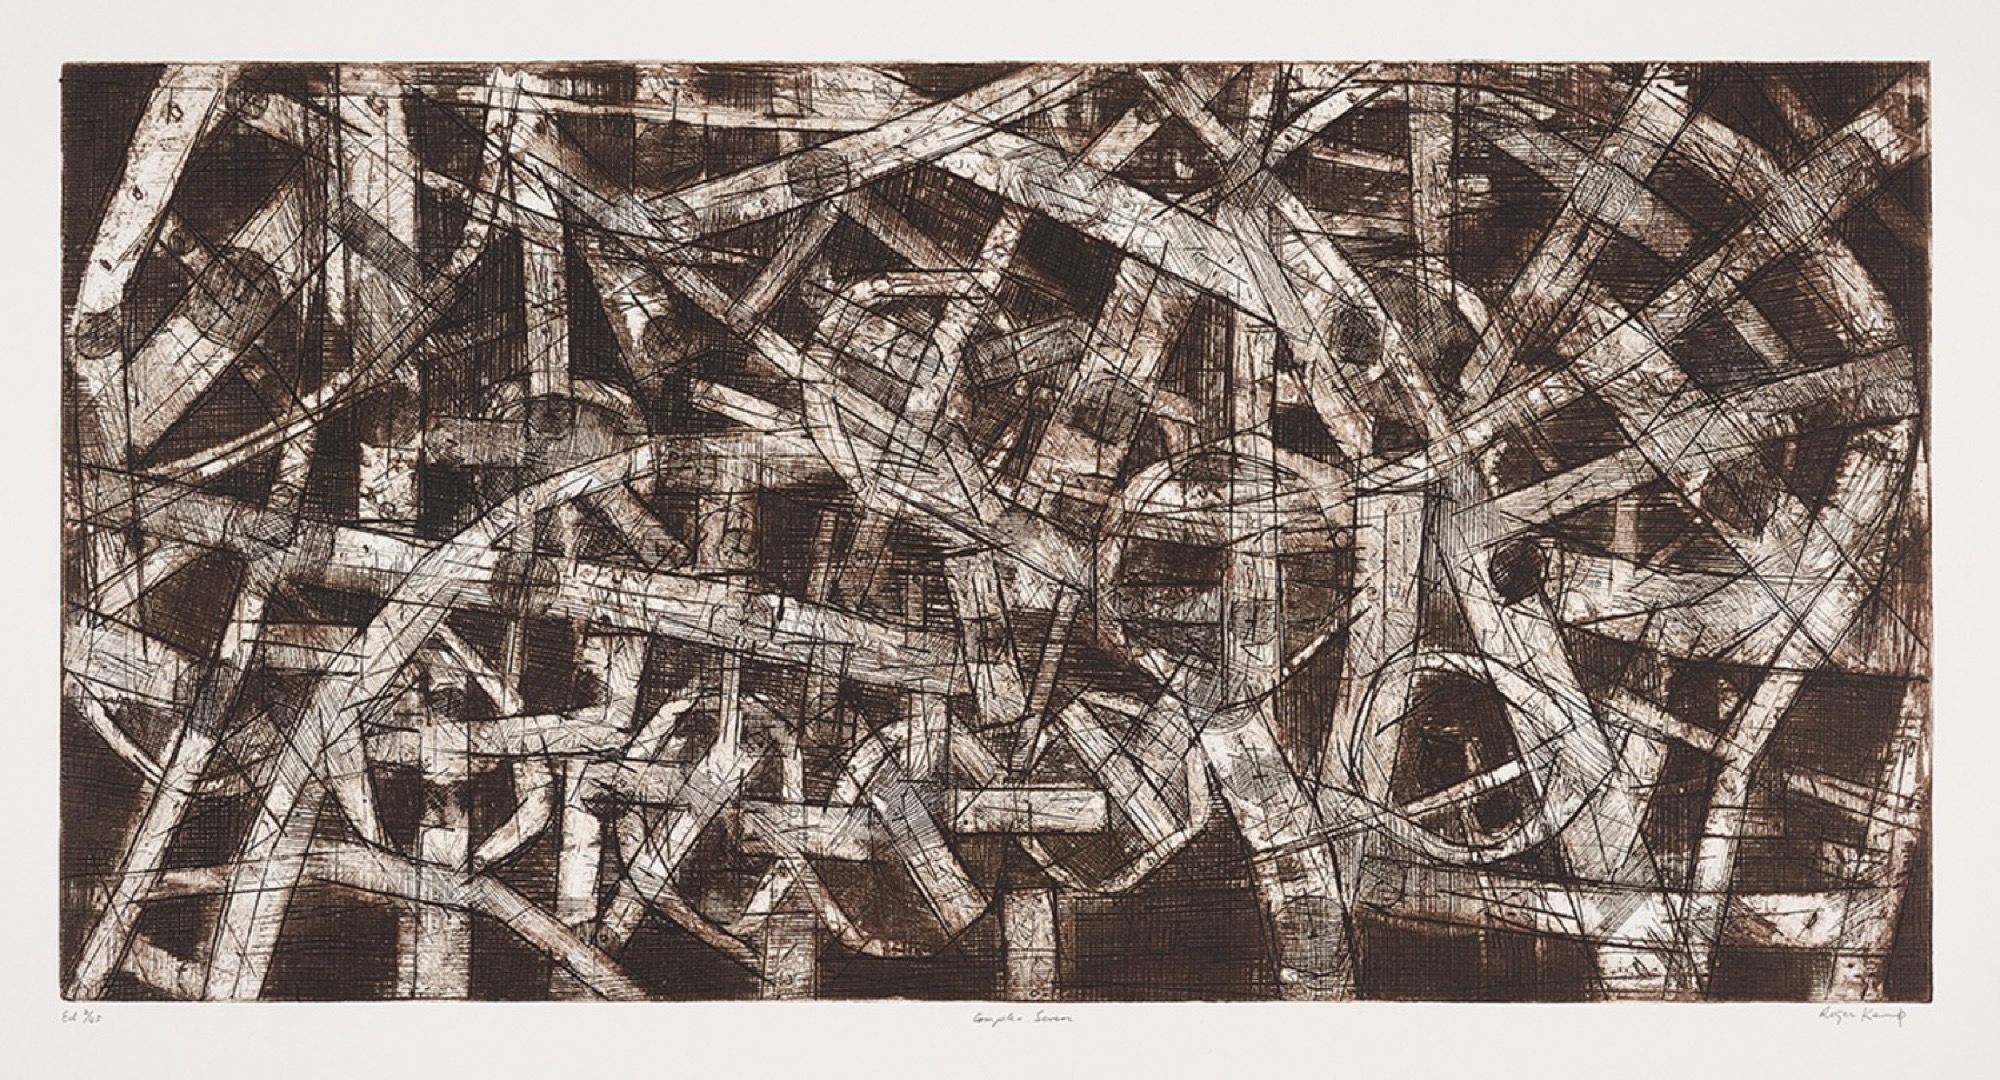 Roger Kemp, <em>Complex Seven</em>, c. 1974 – 1976, etching on paper, 50.7 x 101.0 cm. Copyright Estate of Roger Kemp, Image courtesy Charles Nodrum Gallery